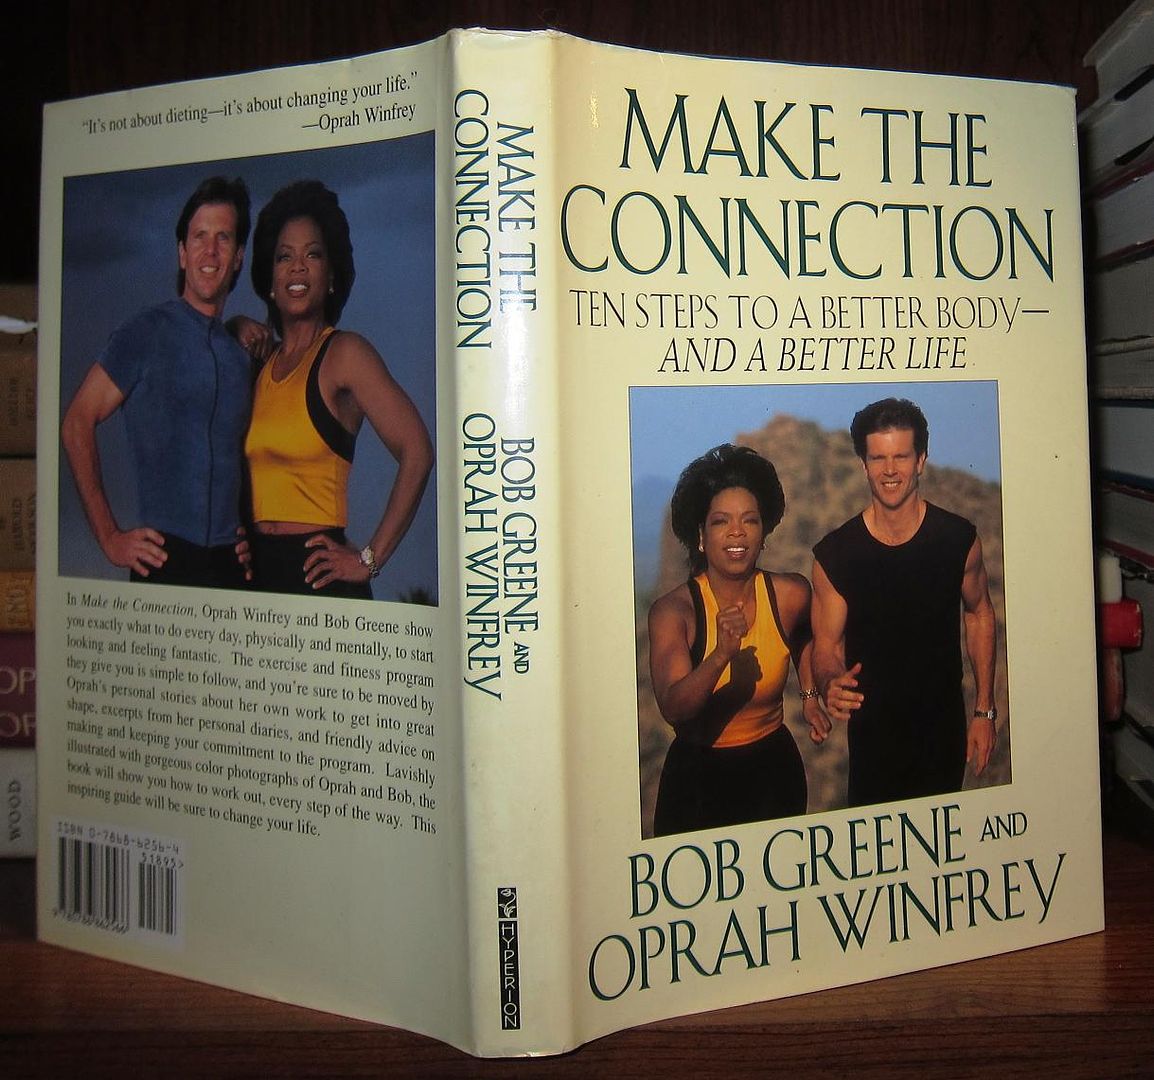 GREENE, BOB & OPRAH WINFREY - Make the Connection Ten Steps to a Better Body - and a Better Life